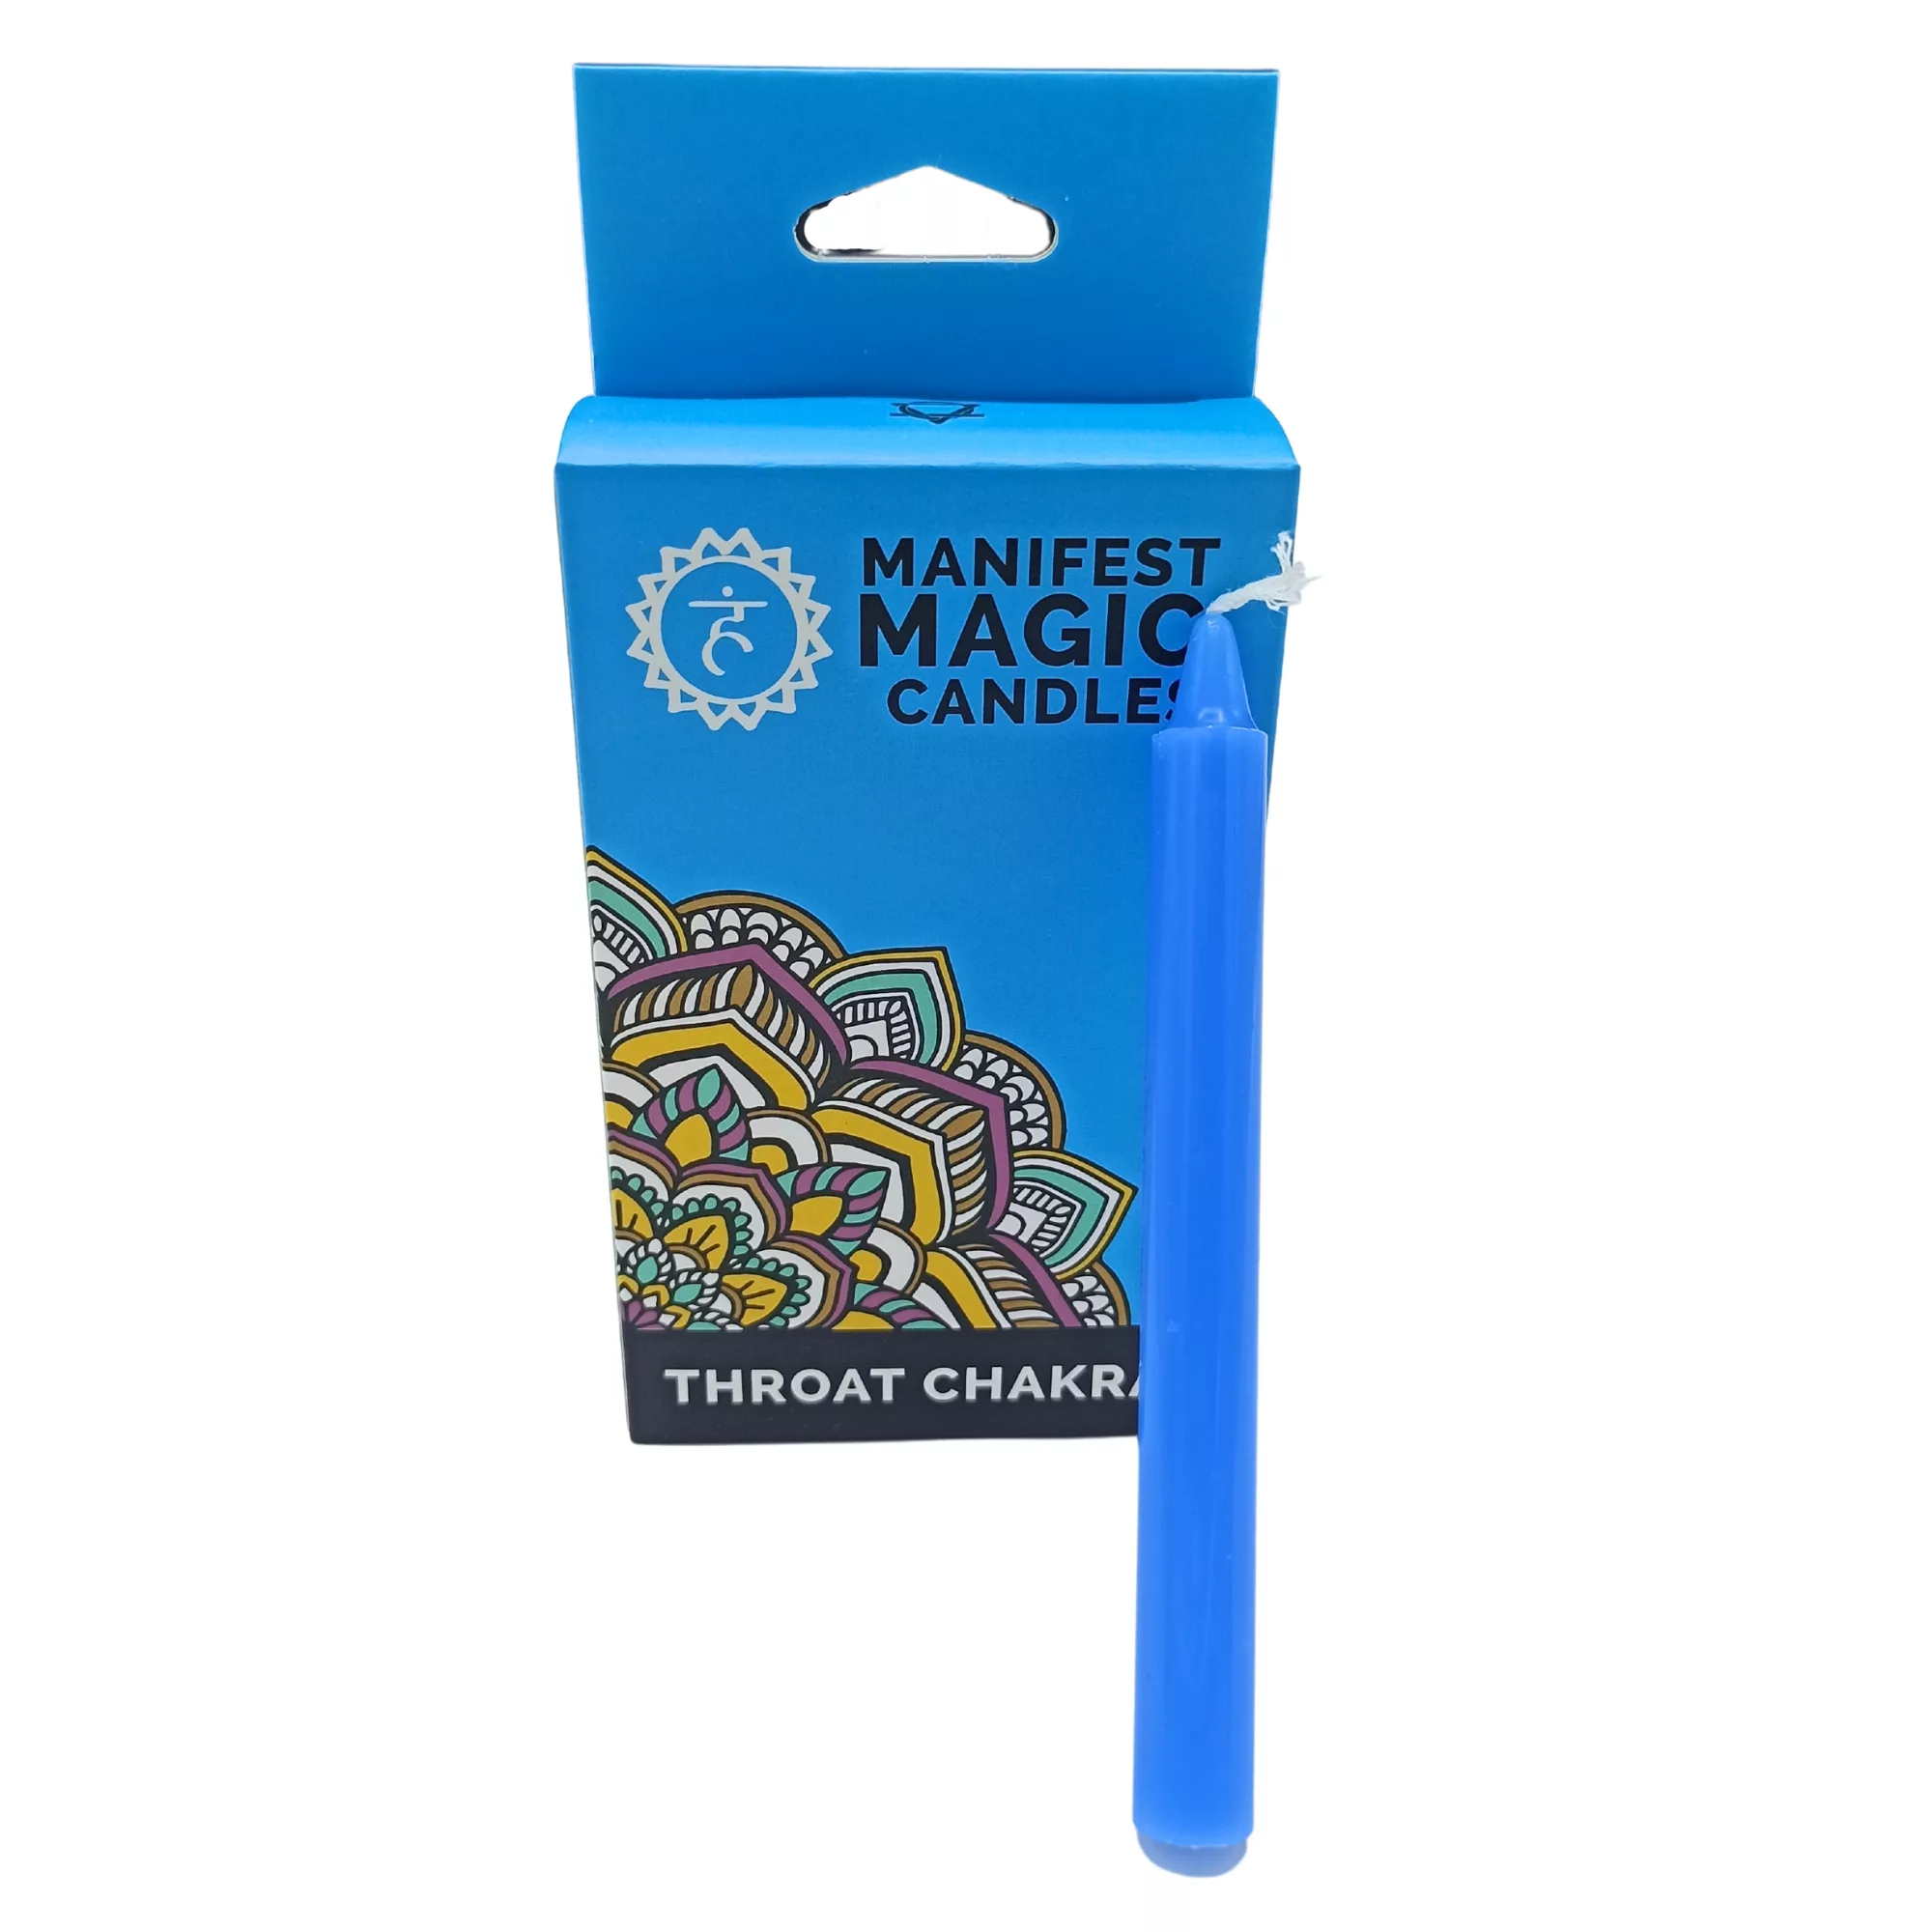 Manifest Magic Candles (pack of 12) – Blue – Throat Chakra